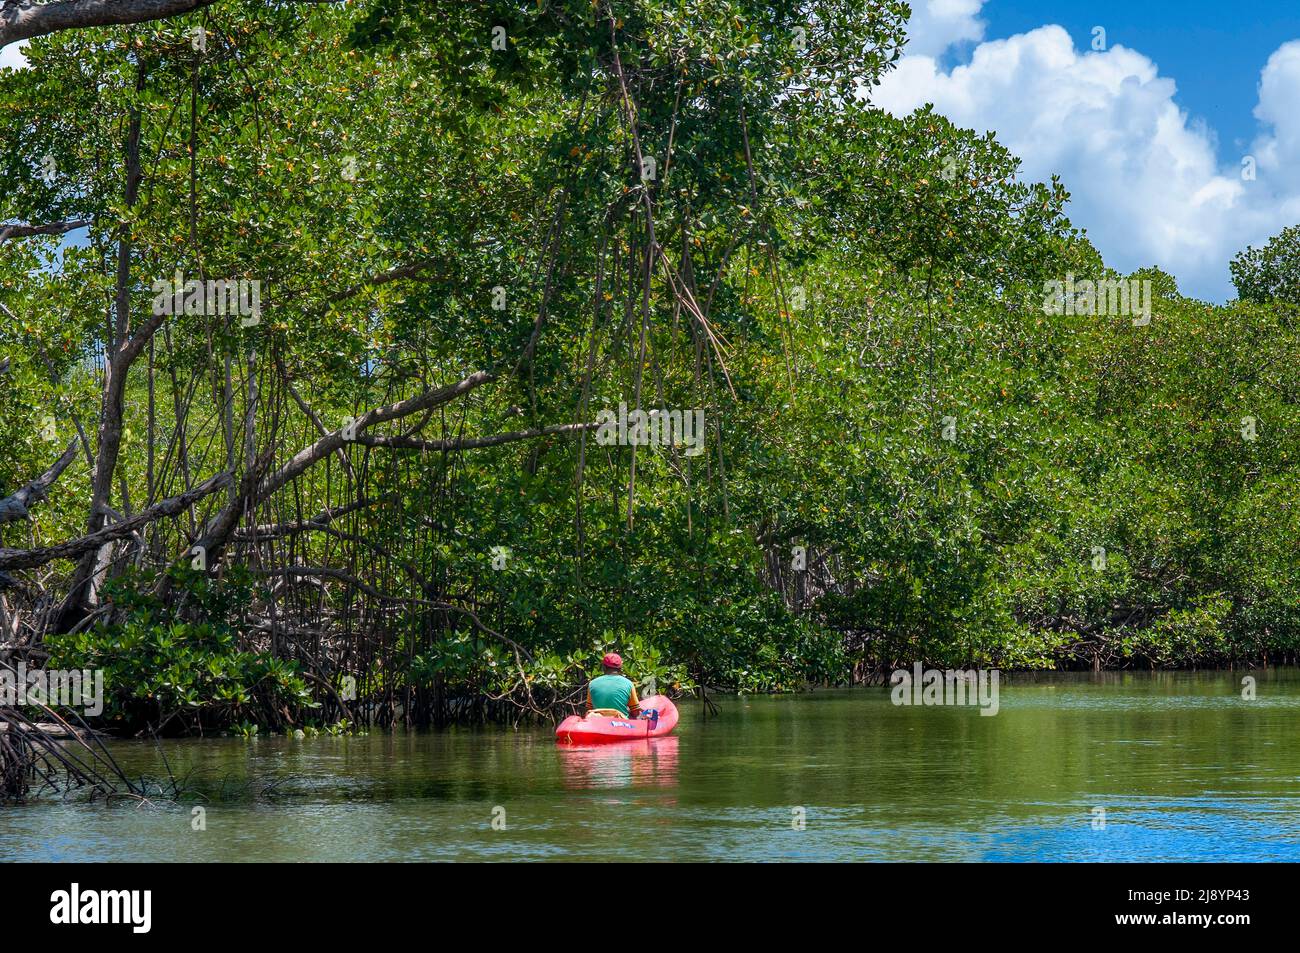 Kajakfahren im Regenwald, Mangroves. Ökotourismus. Nationalpark Los Haitises, Sabana de La Mar, Dominikanische Republik. Los Haitises National Park ist ein Stockfoto